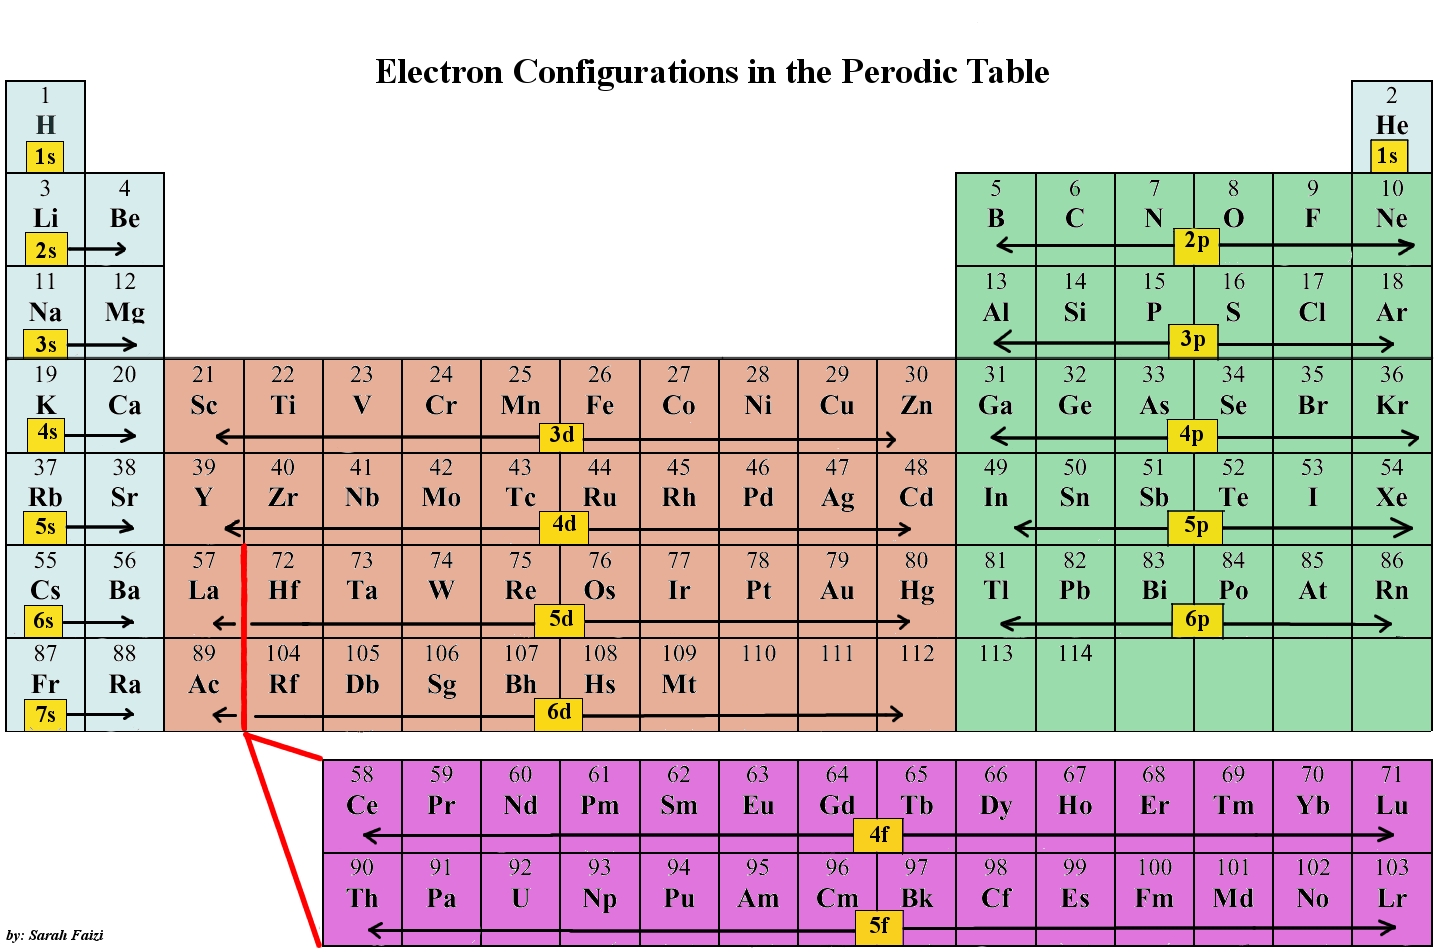 Electron Configuration for Phosphorus (P)